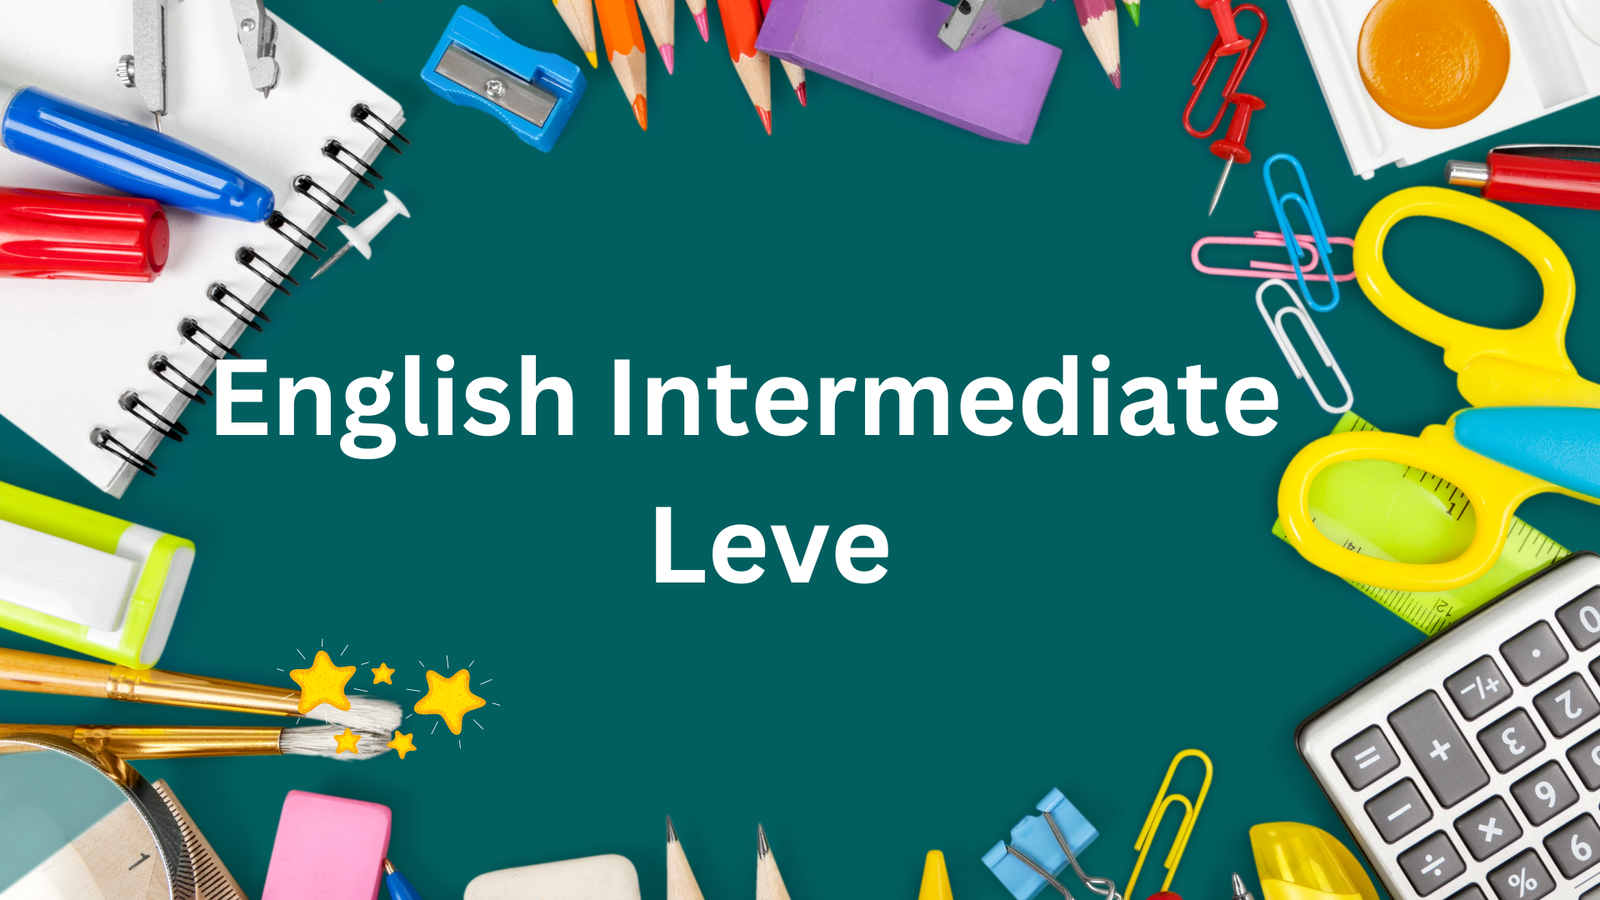 English intermediate Leve